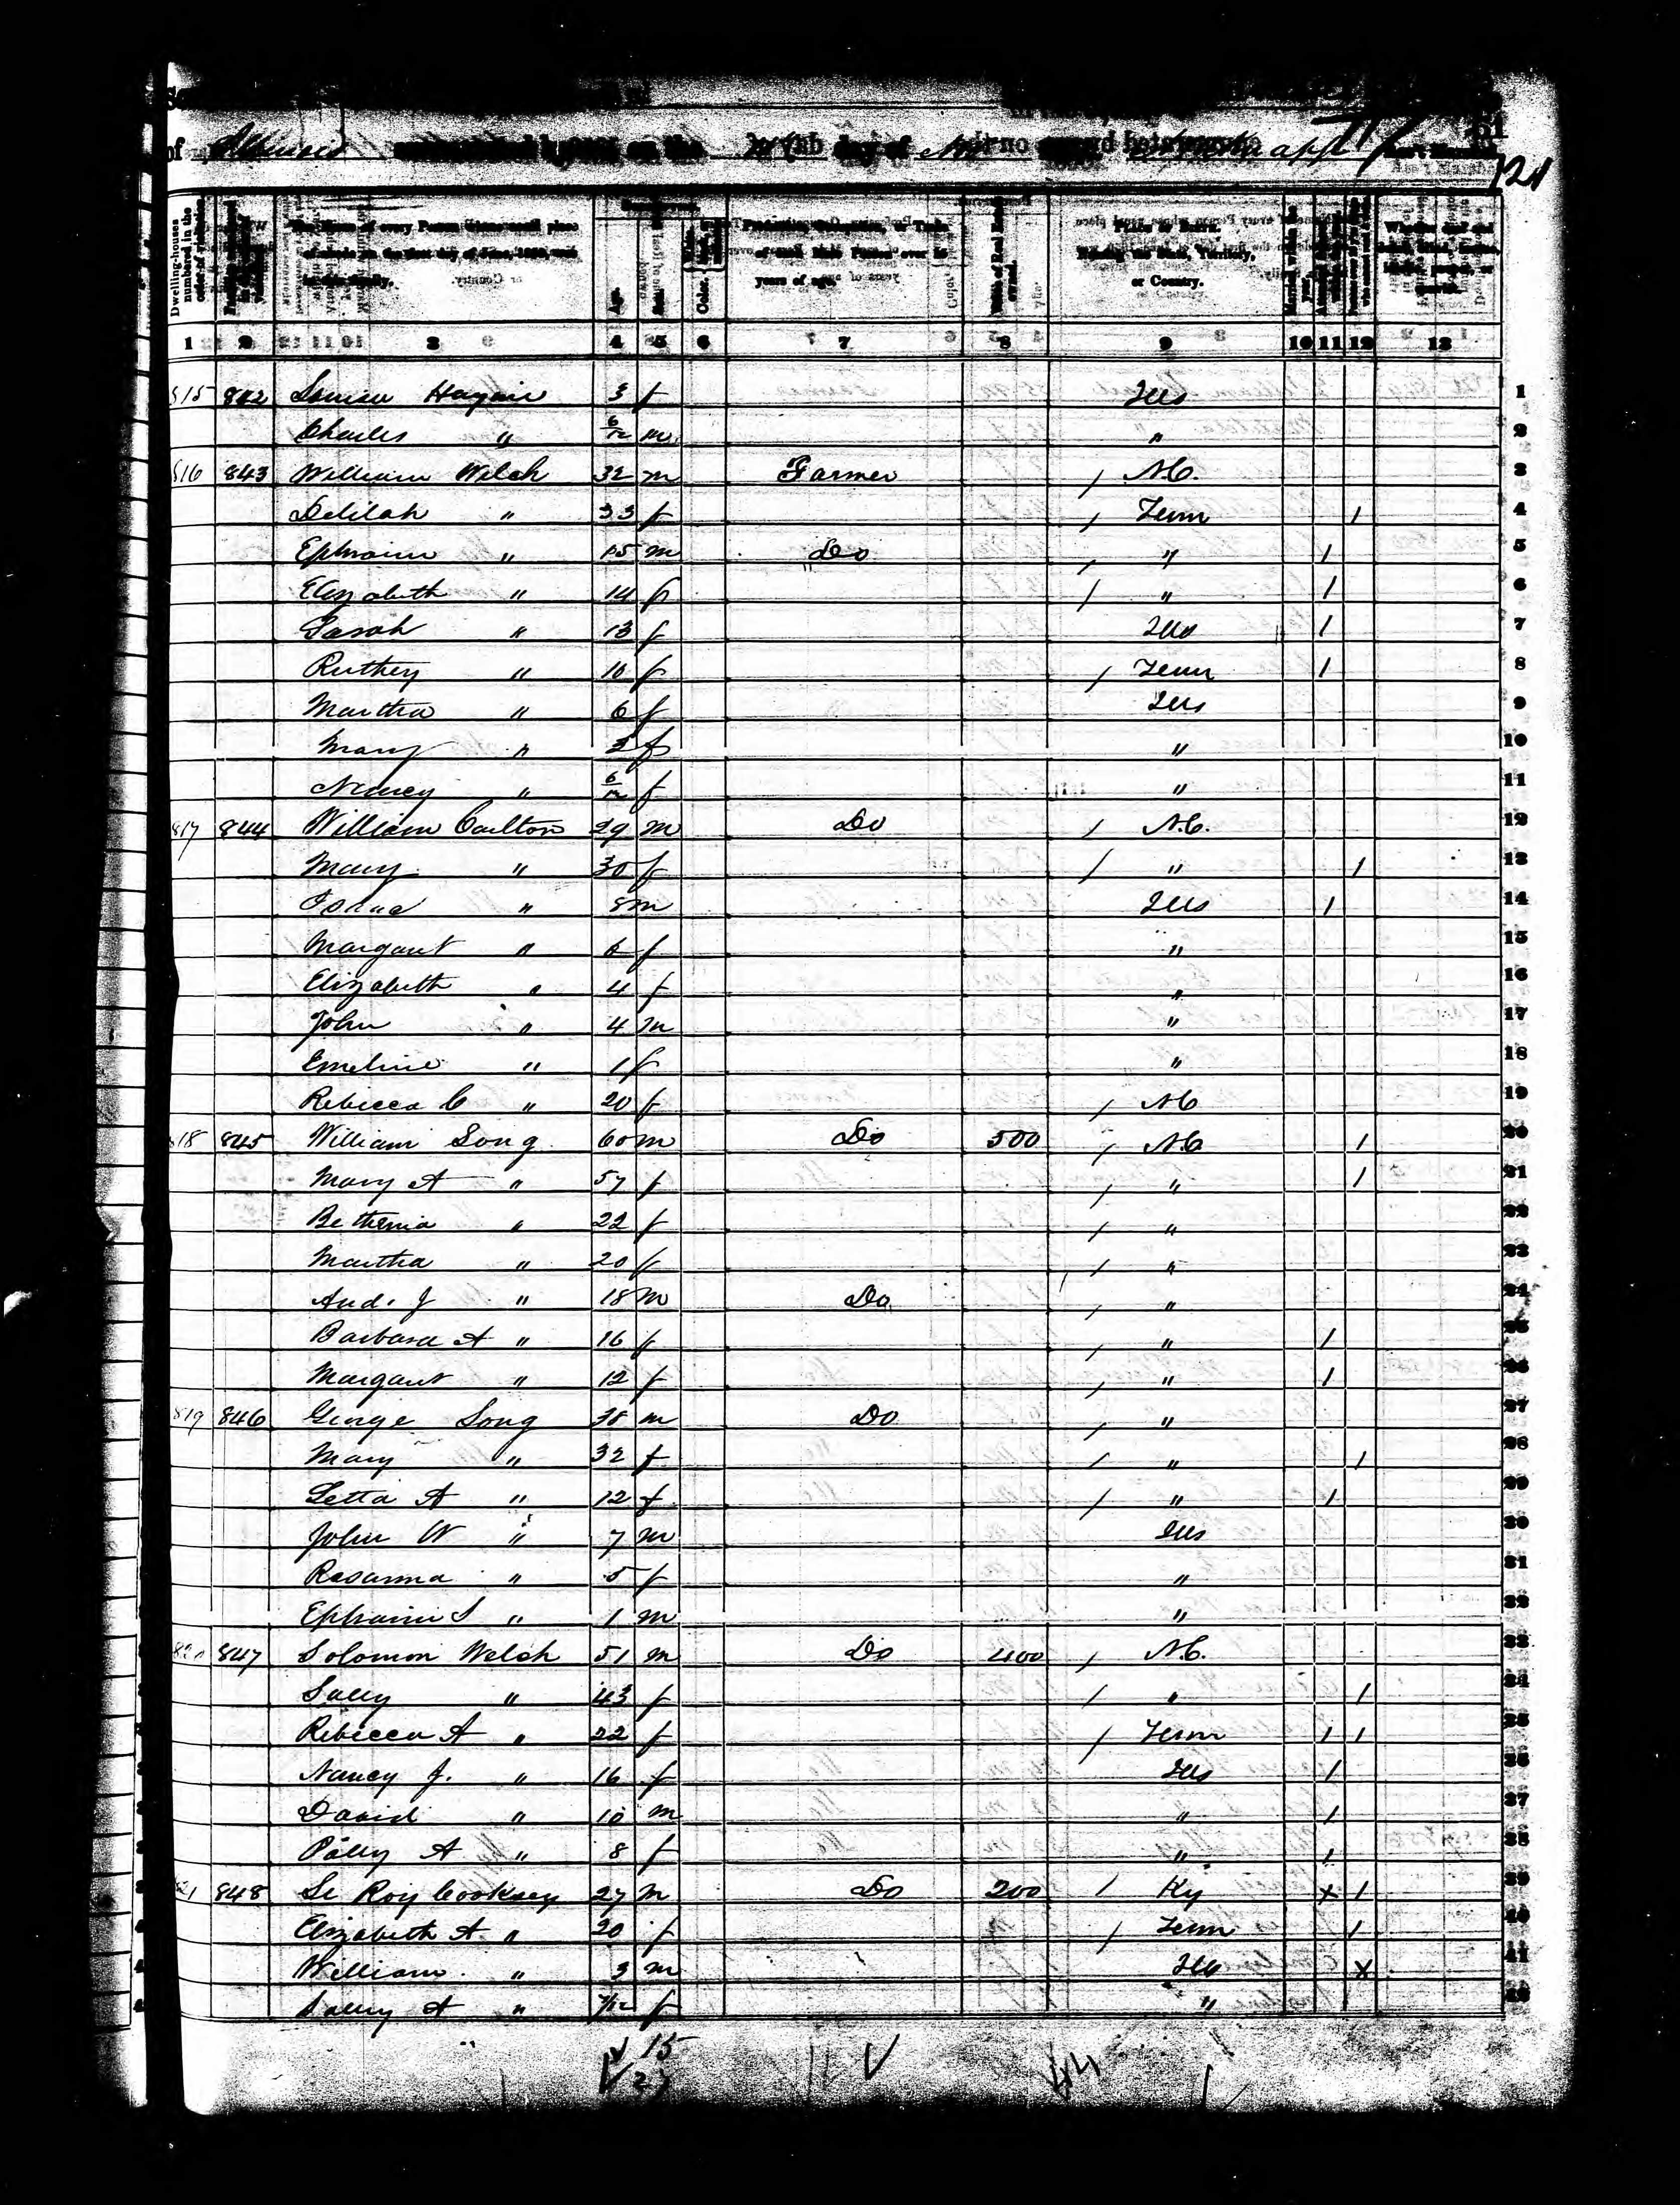 1850 United States Federal Census - Scott Co., Illinois